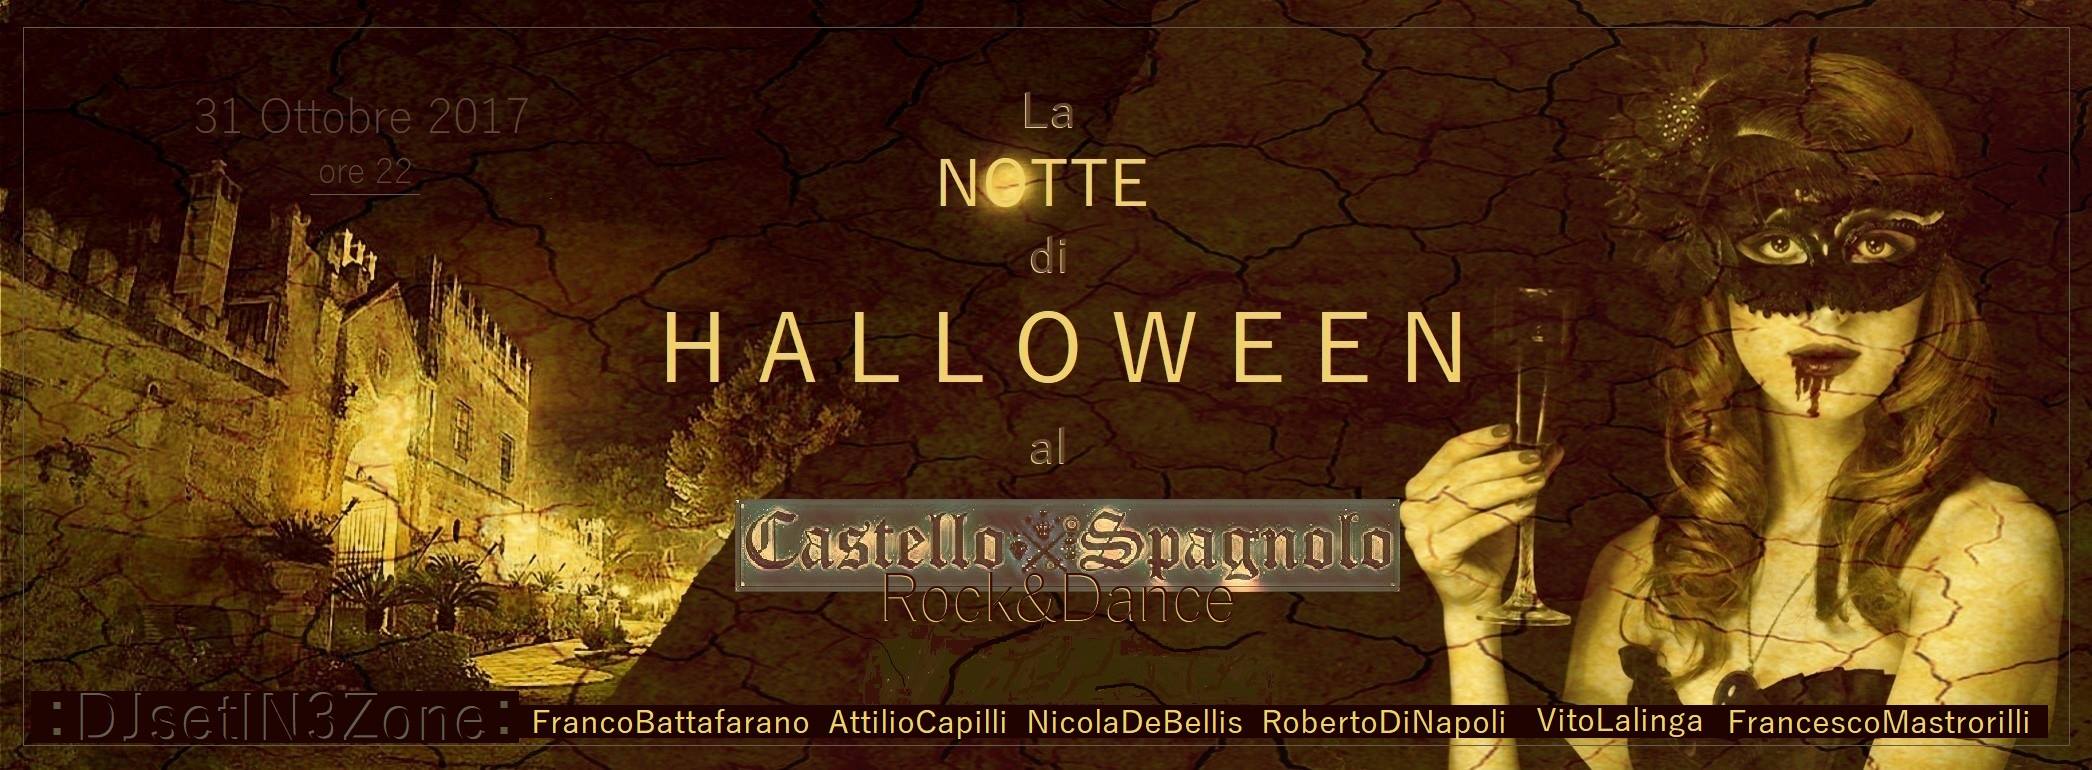 Halloween 2017 @Castello Spagnolo